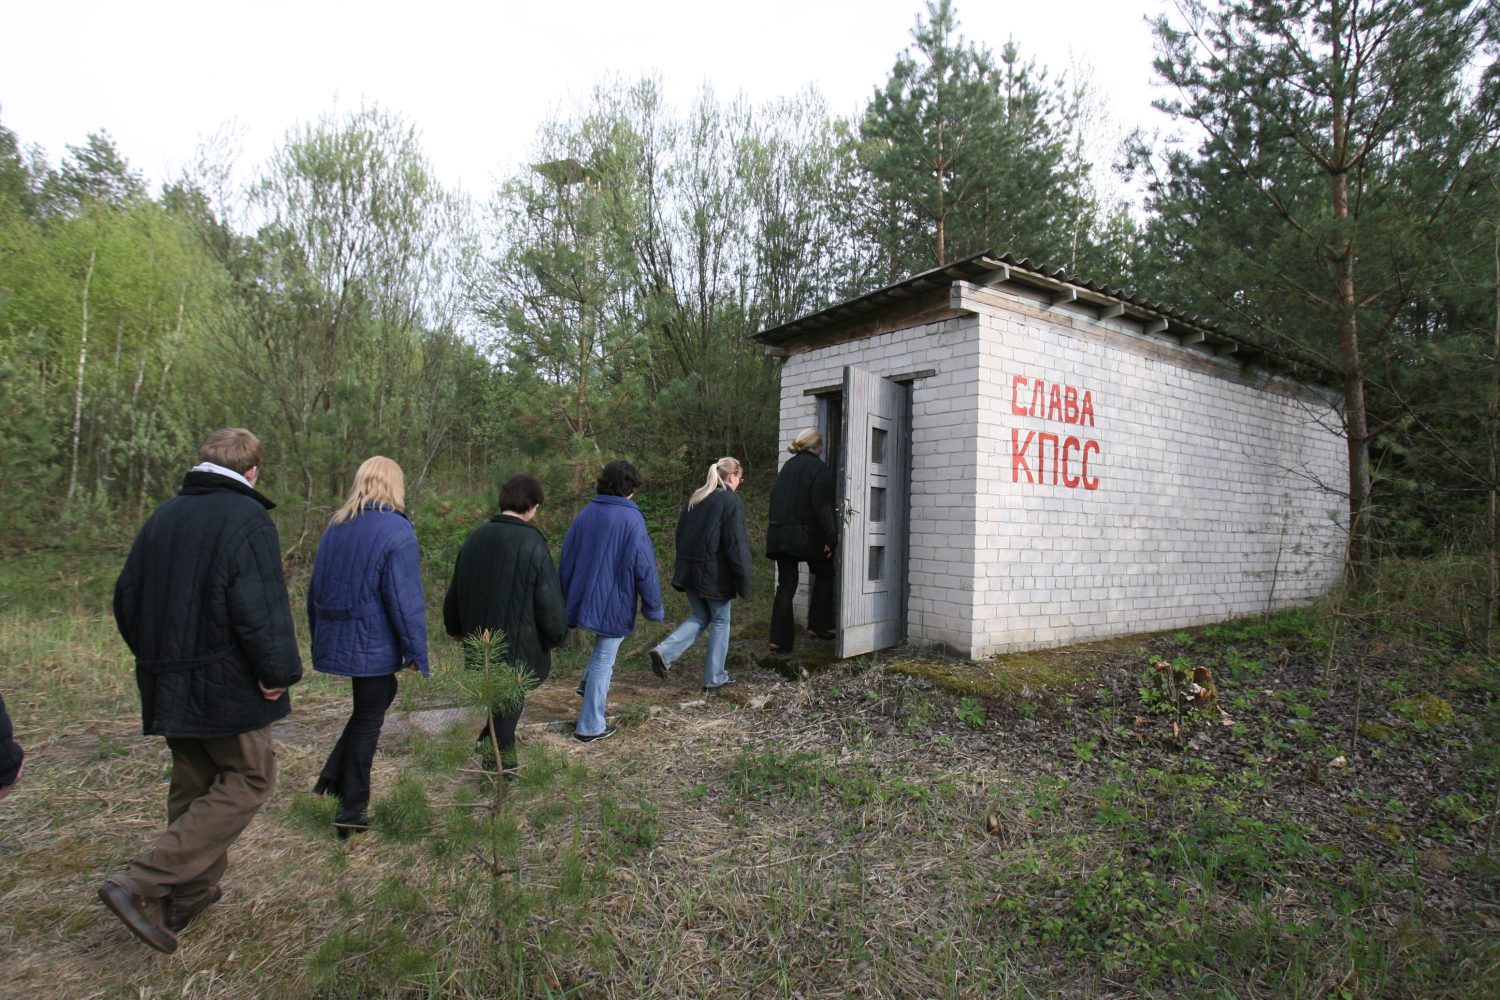 Soviet Bunker Tour in Lithuania4